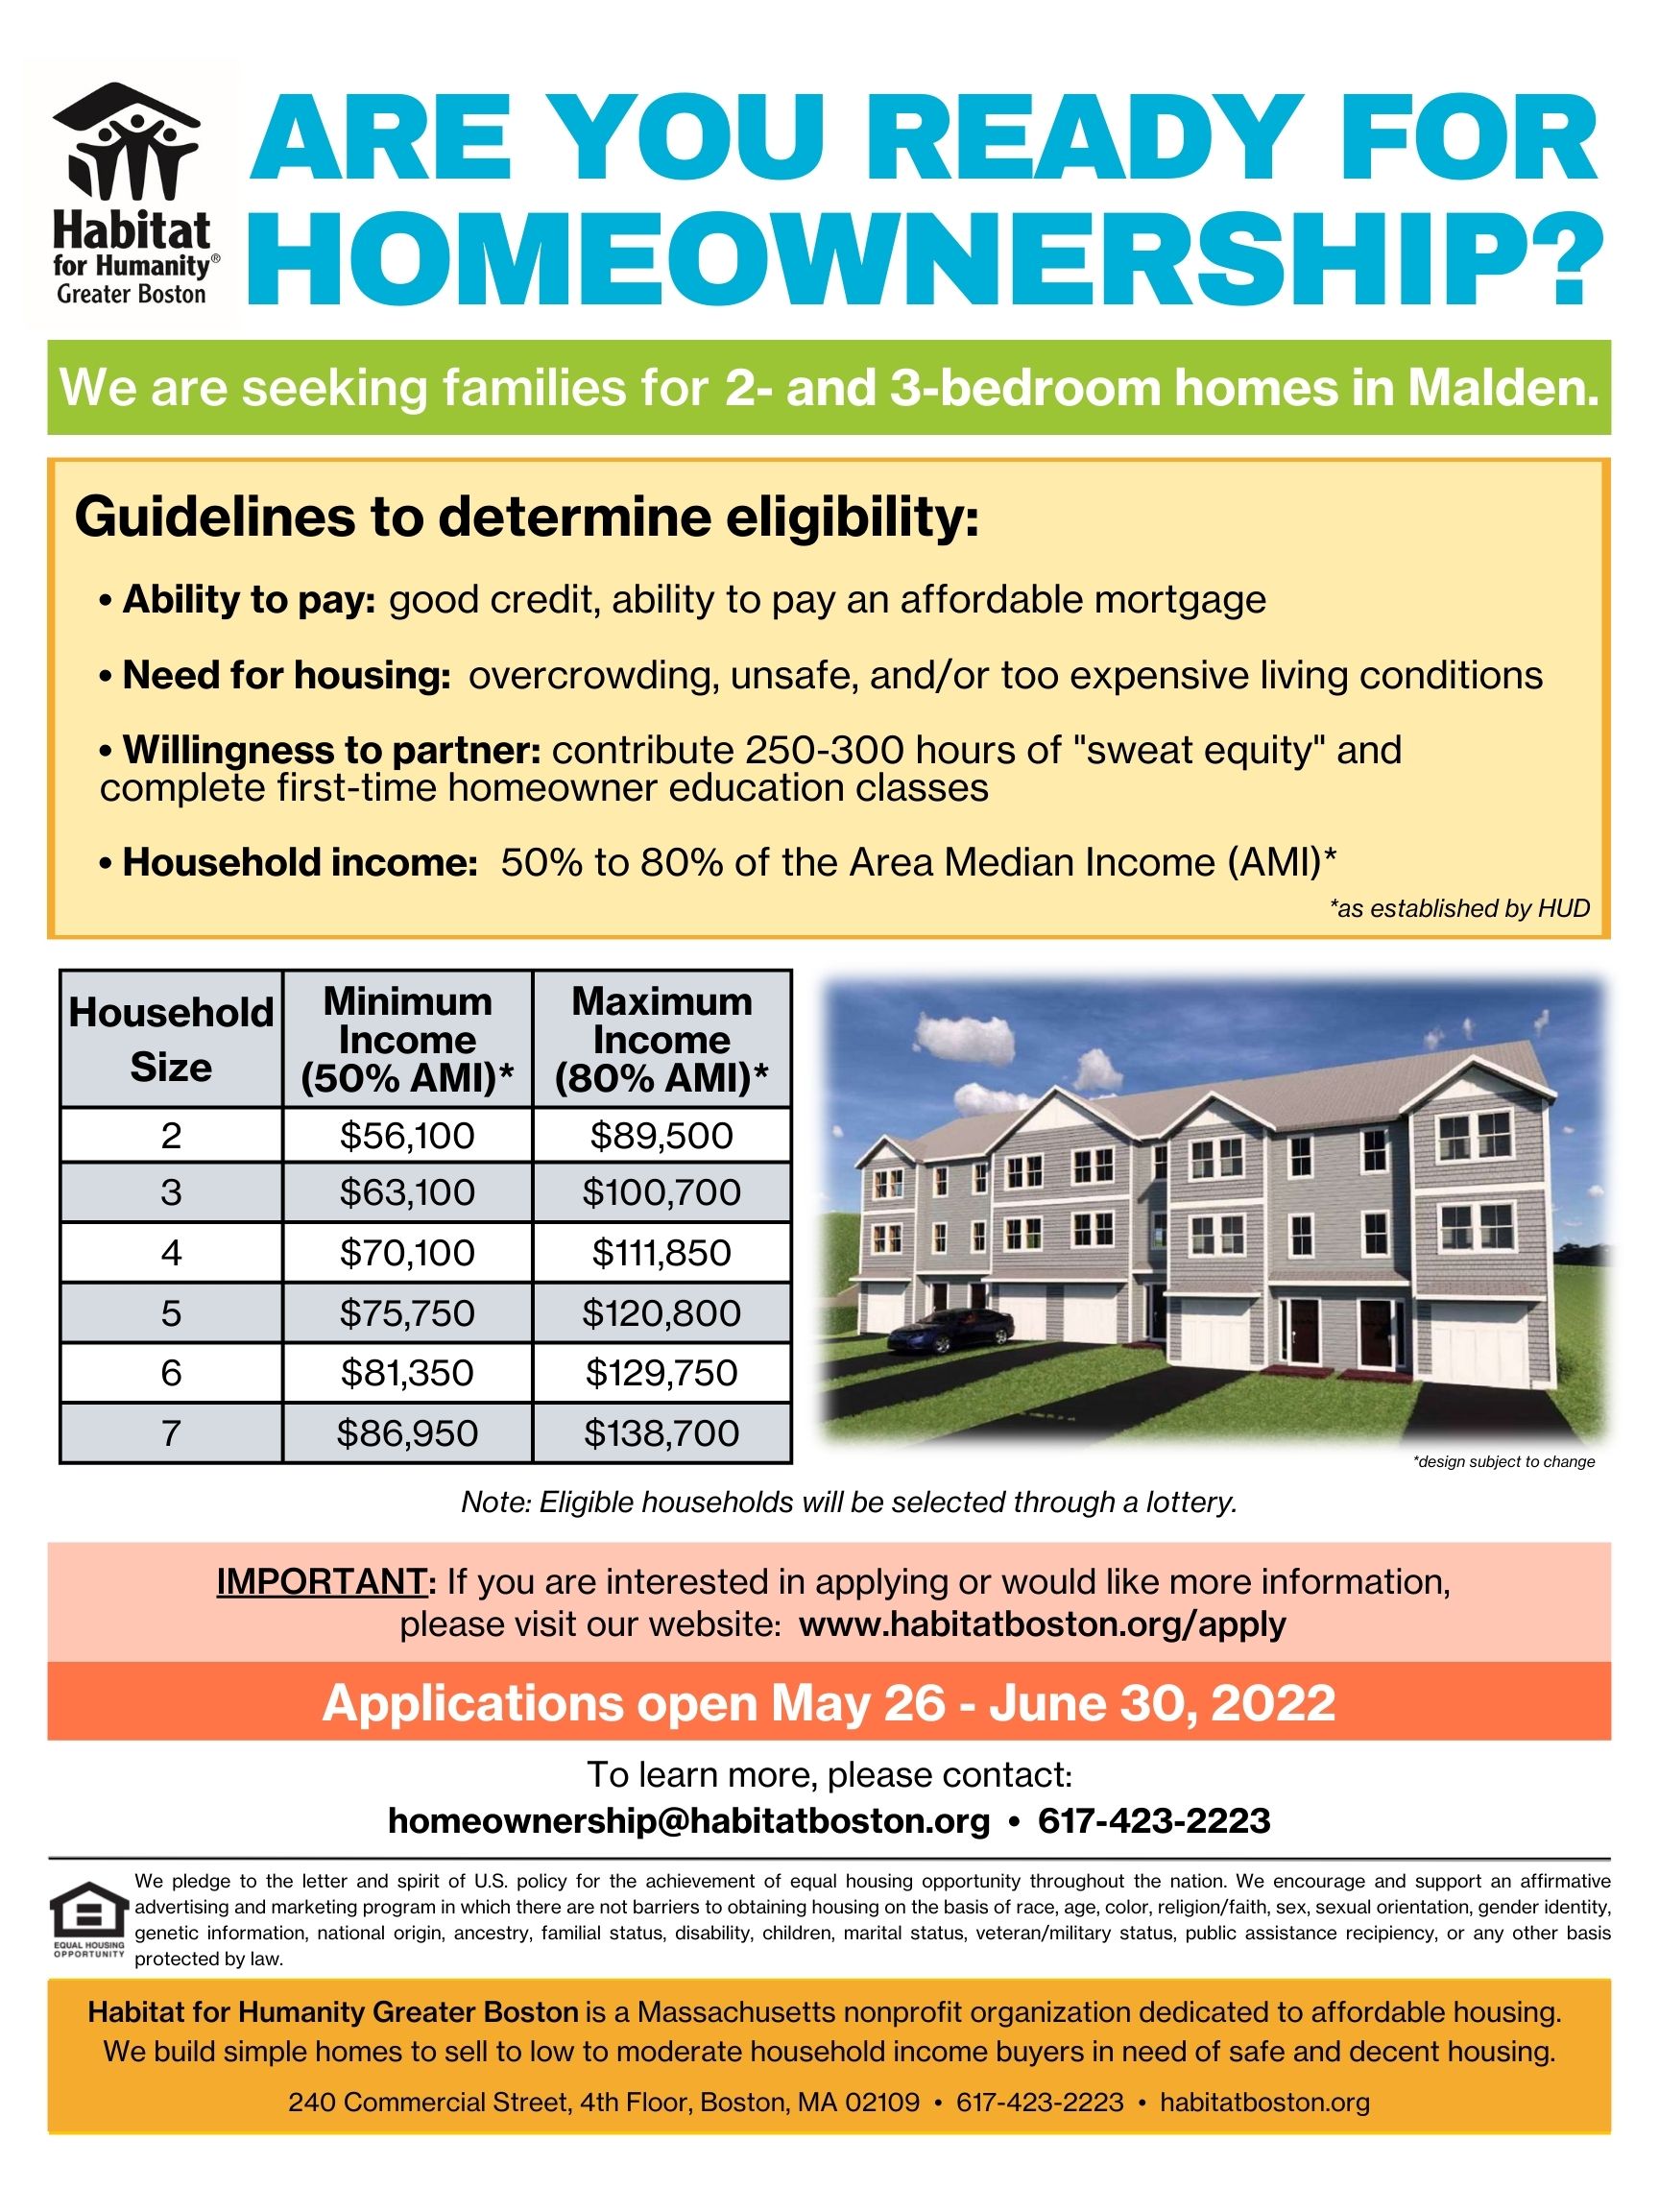 Habitat Greater Boston Homeownership in Malden